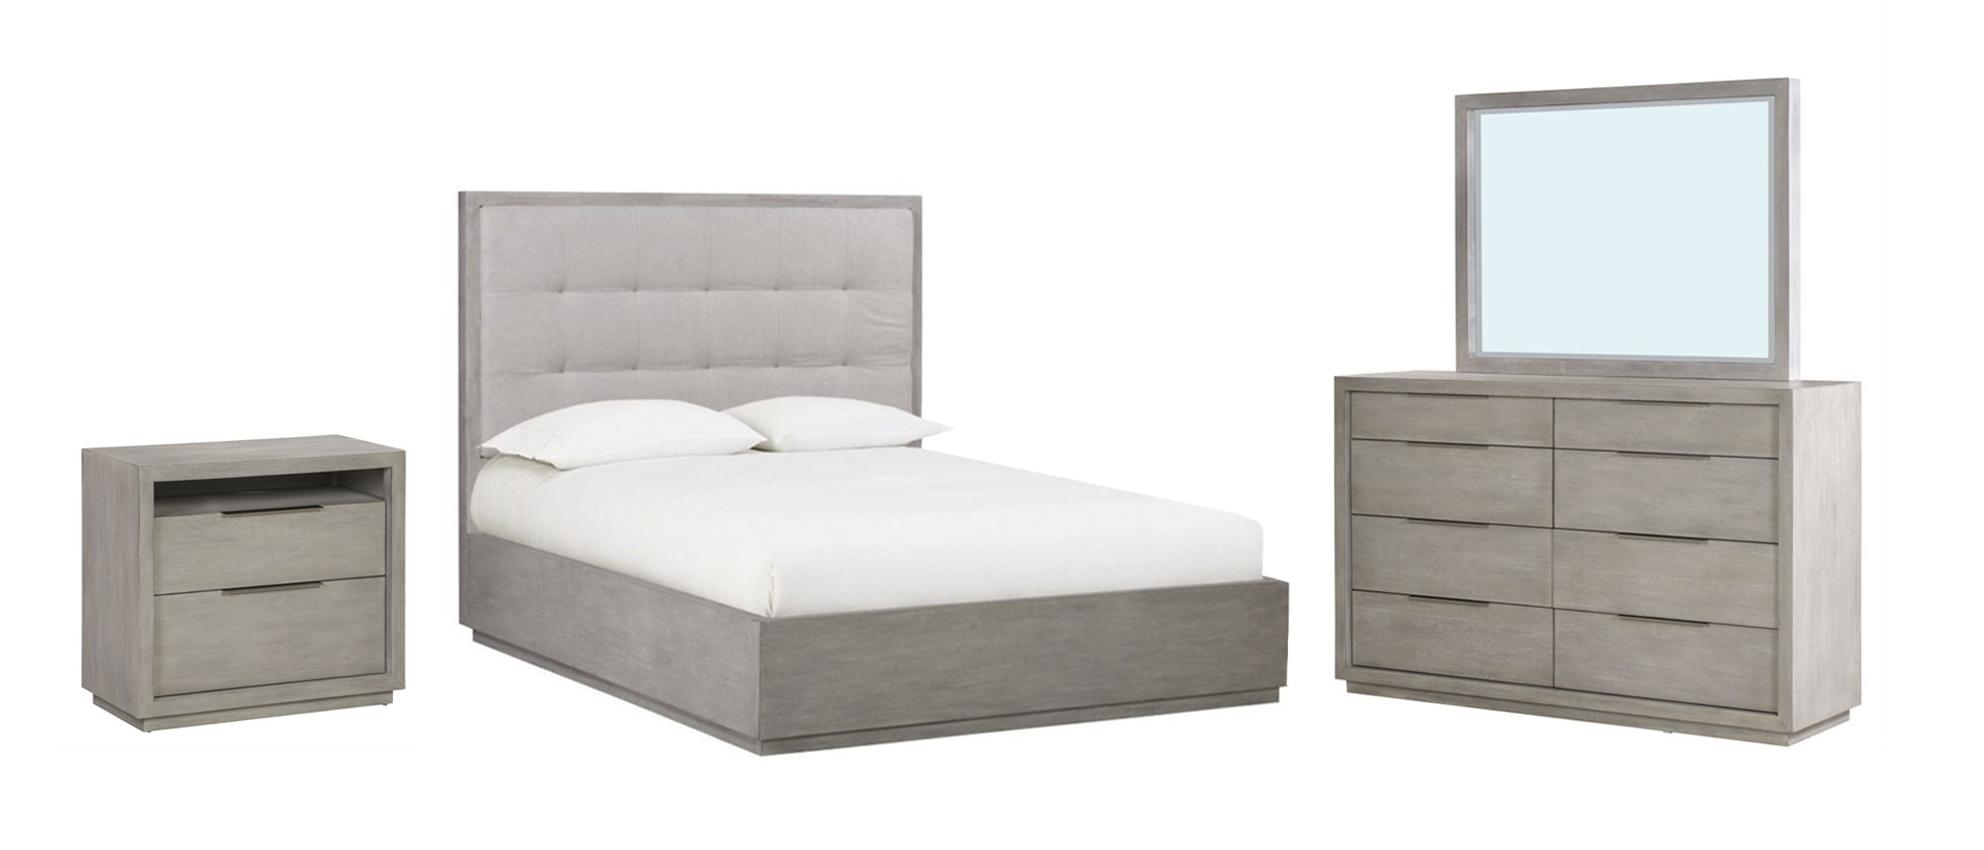 Contemporary Platform Bedroom Set OXFORD AZBXF5-NDM-4PC in Light Gray, Stone Fabric